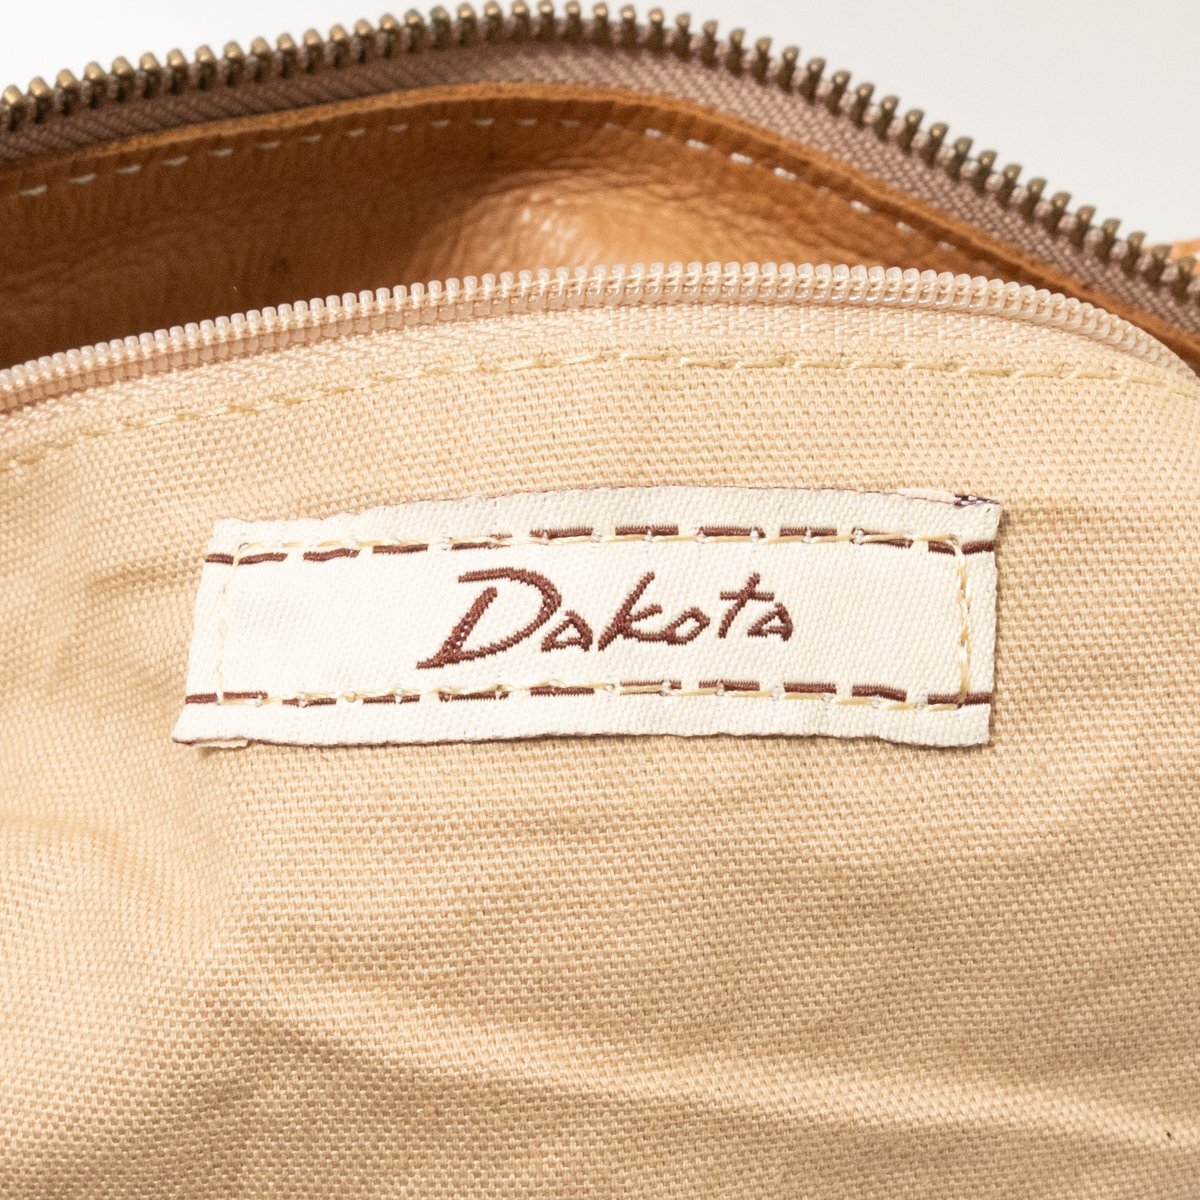 Dakota ダコタ 2WAY ショルダーバッグ トートバッグ ブラウン 茶 レザー 本革 レディース 斜め掛け 手さげ 大容量 カジュアル bag 鞄の画像10